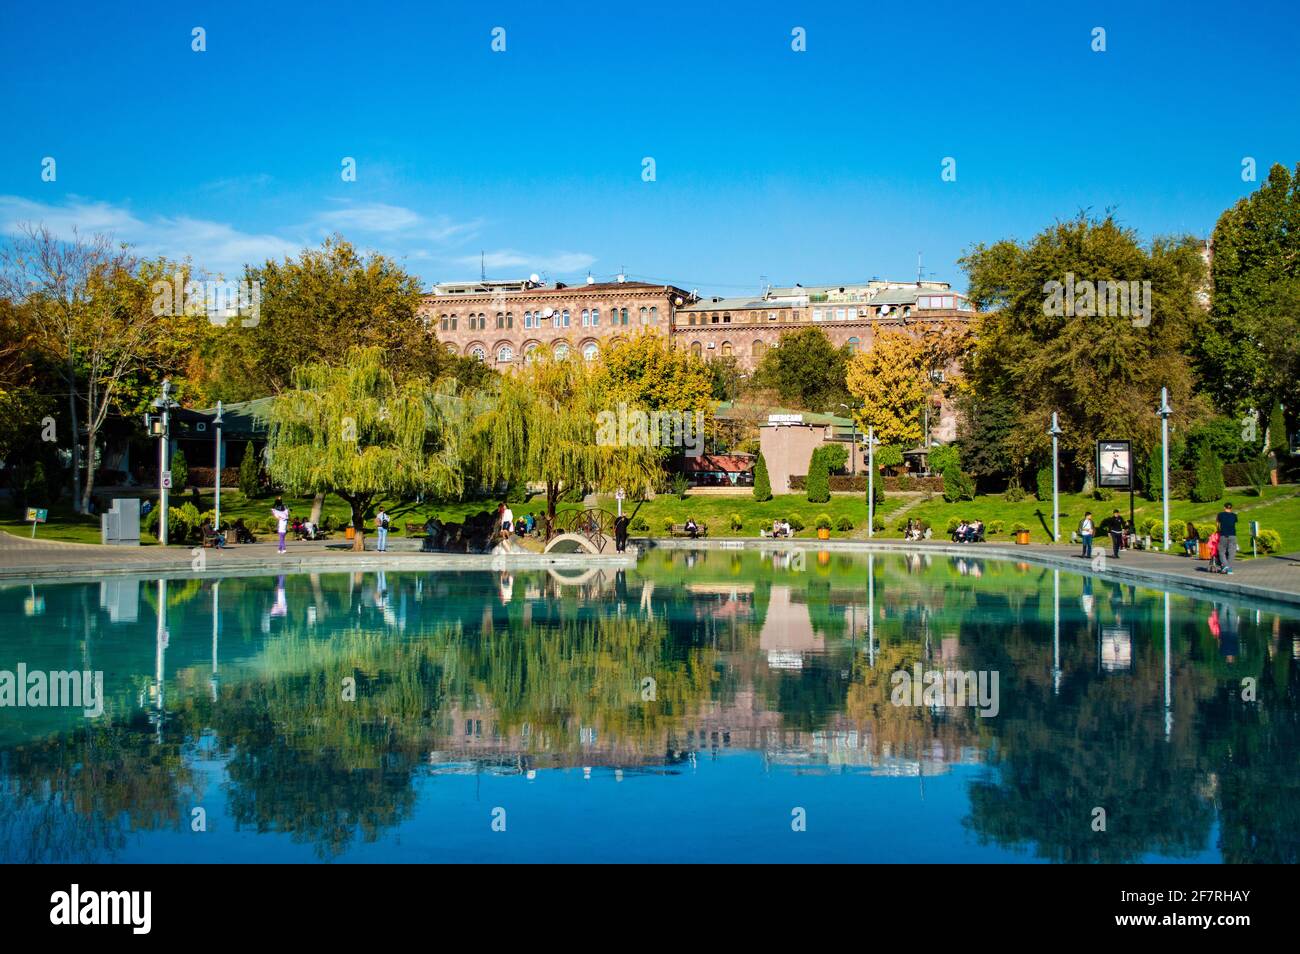 Yerevan, Armenia - October 31, 2019: Swant Lake, a popular park among locals in Yerevan, Armenia Stock Photo